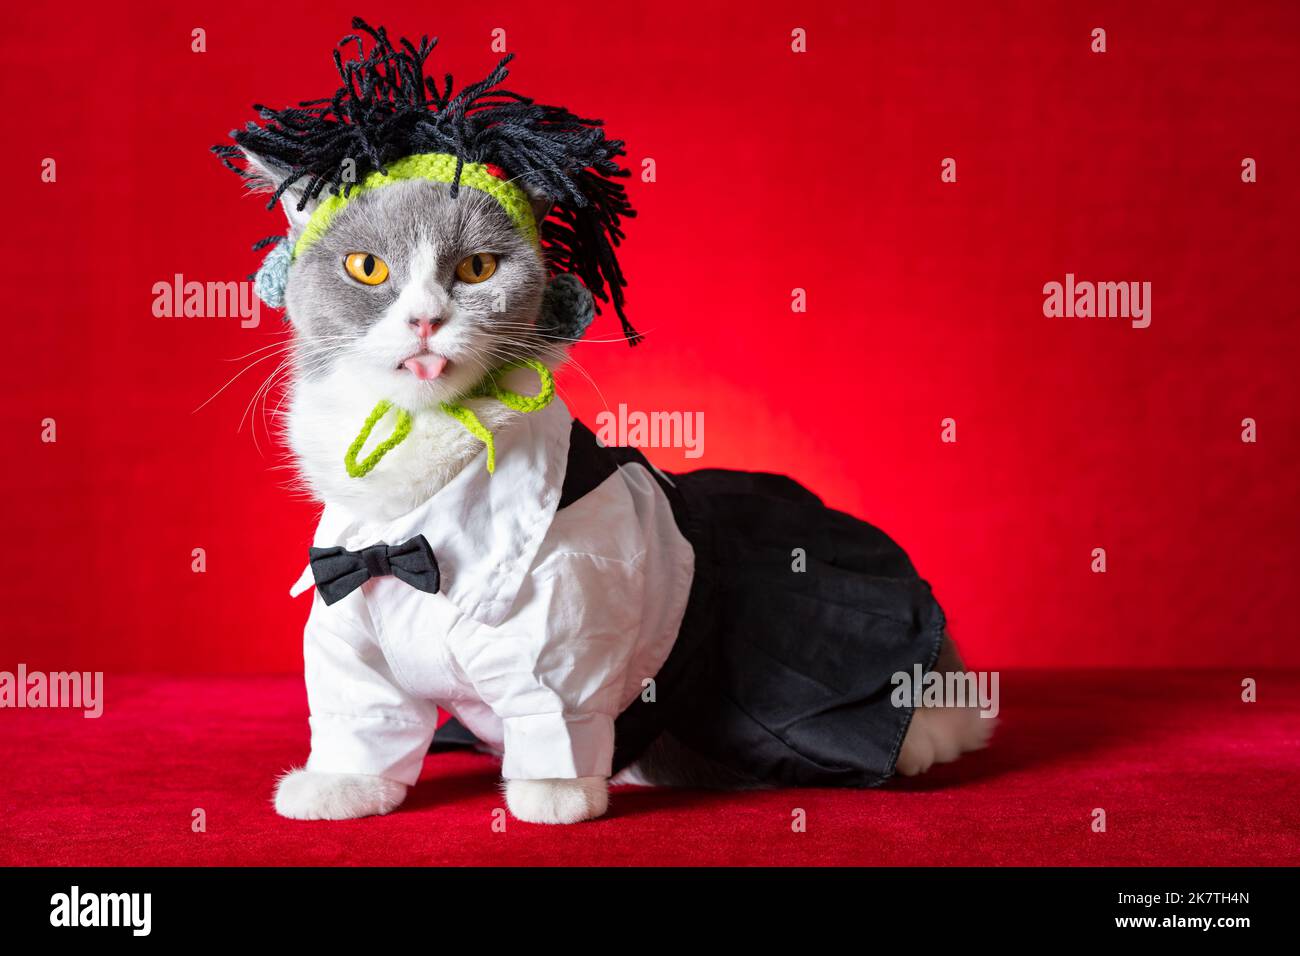 Peluca de gato fotografías de alta resolución - Alamy